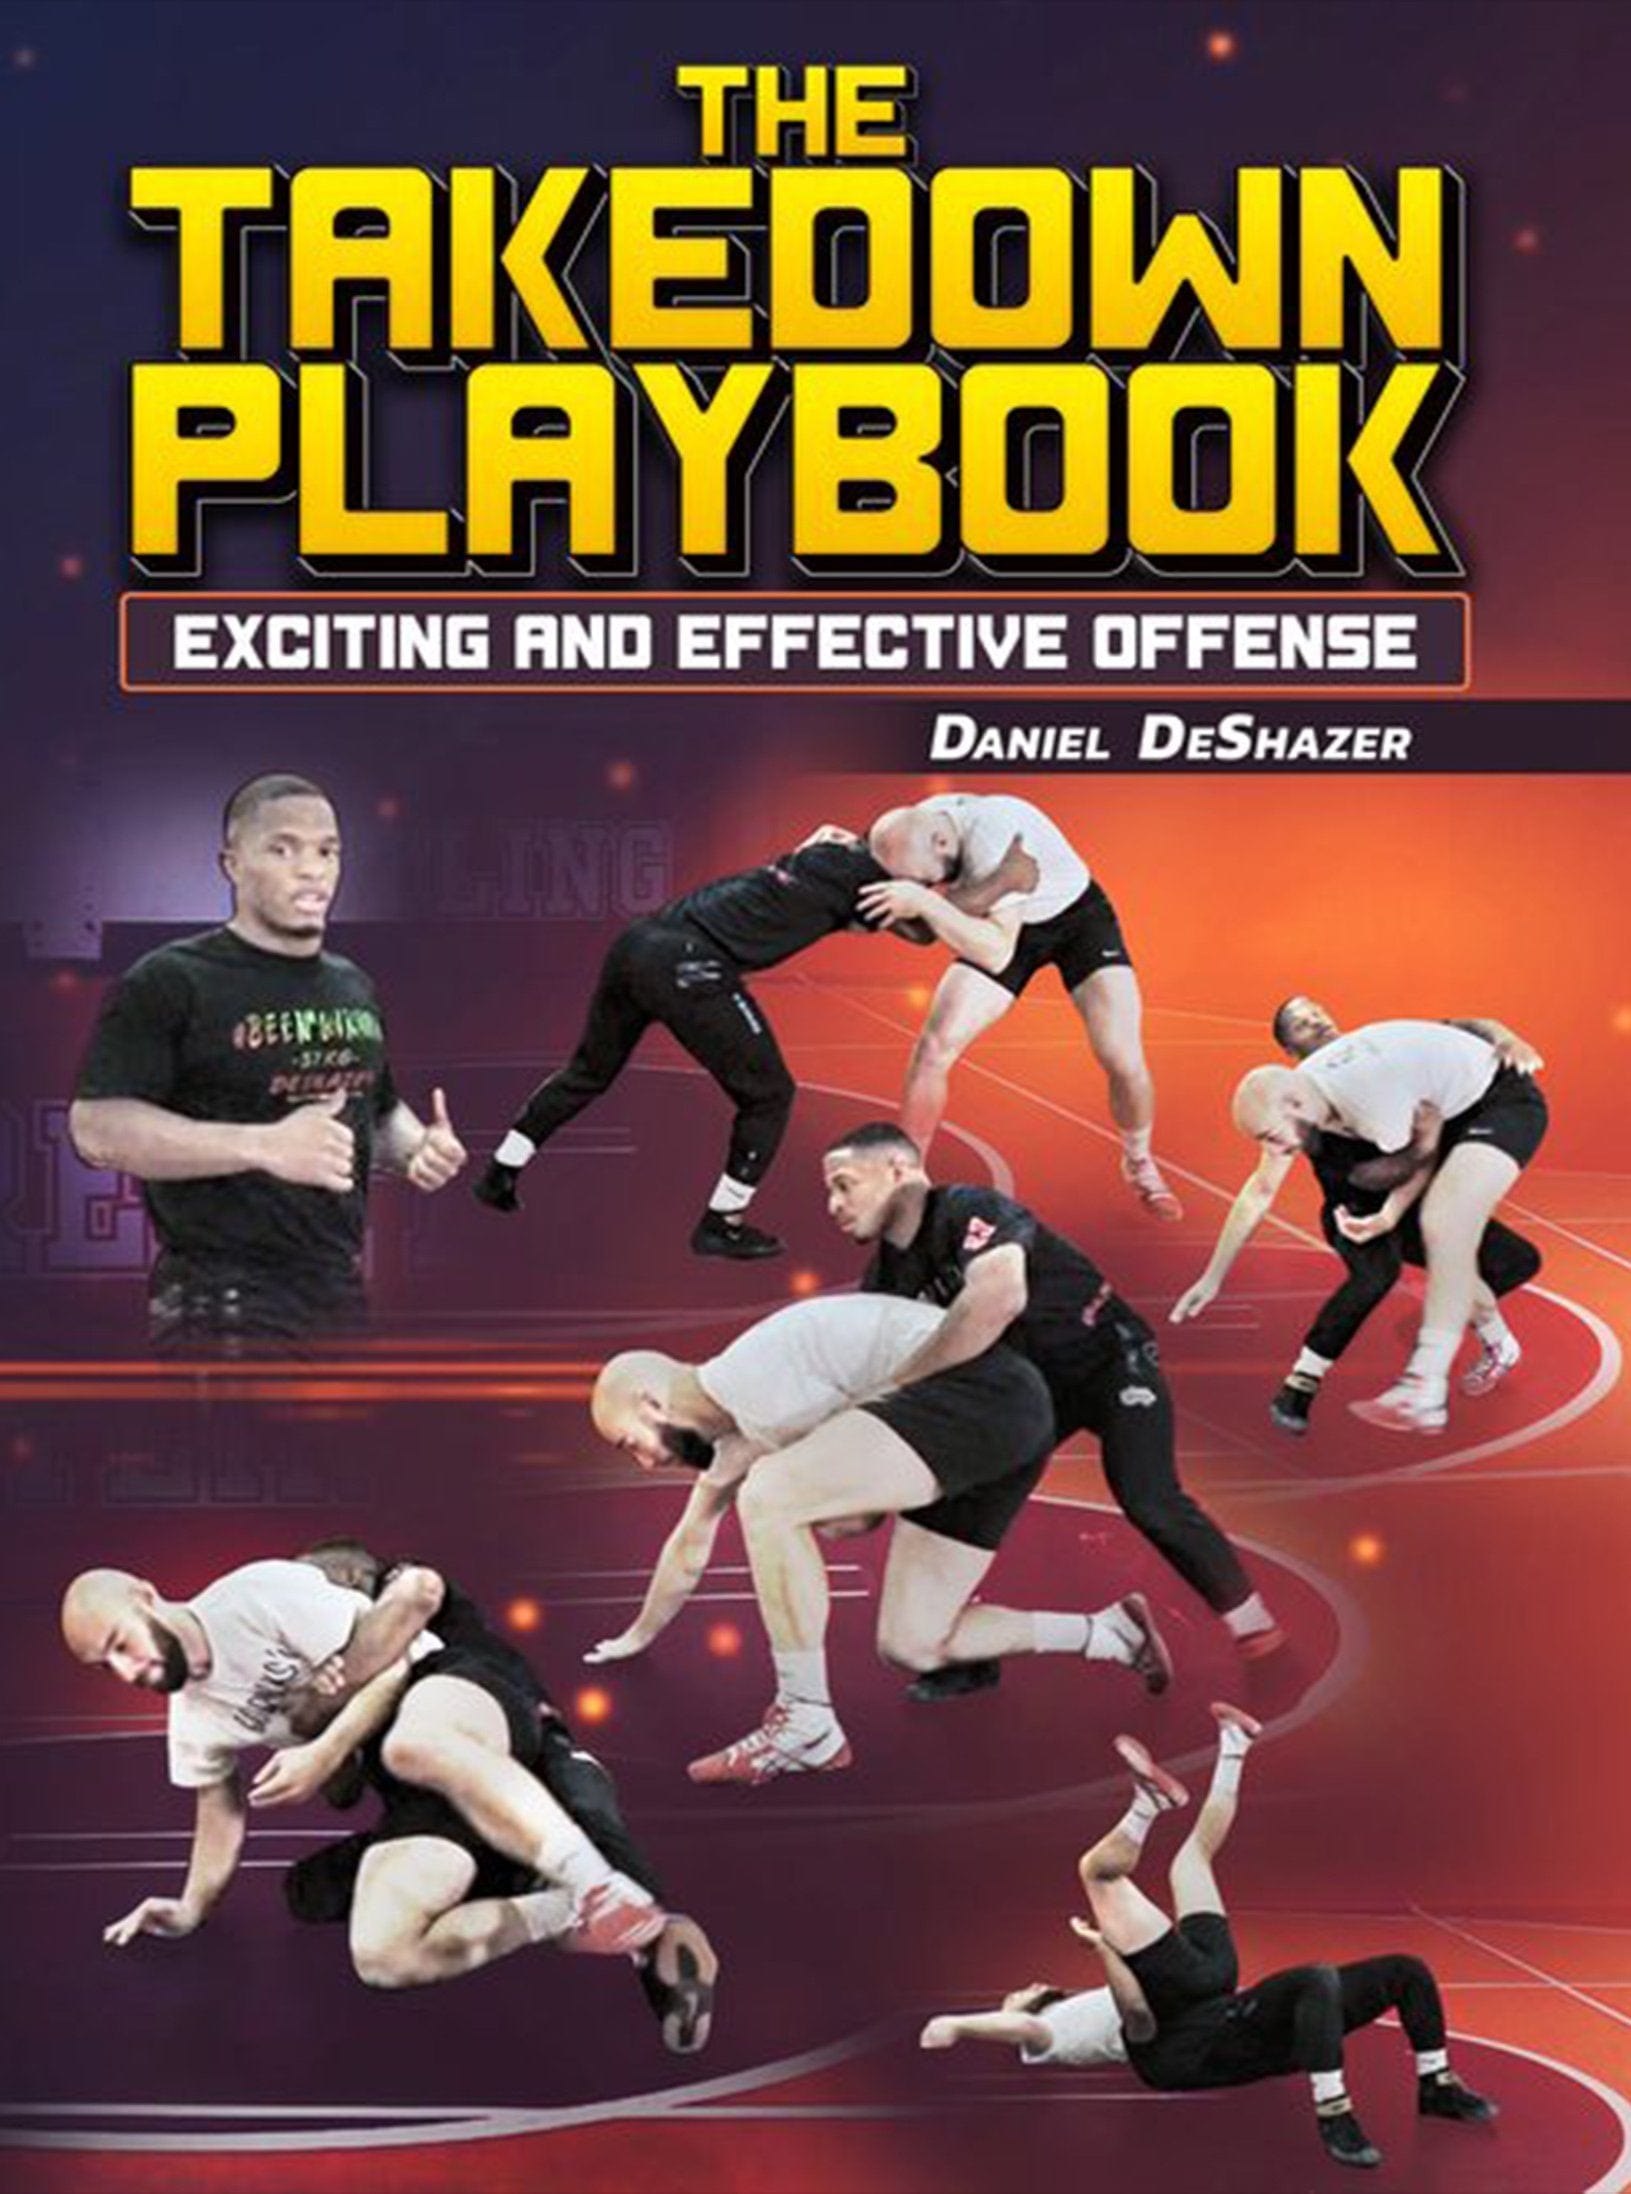 The Takedown Playbook by Daniel DeShazer - Fanatic Wrestling